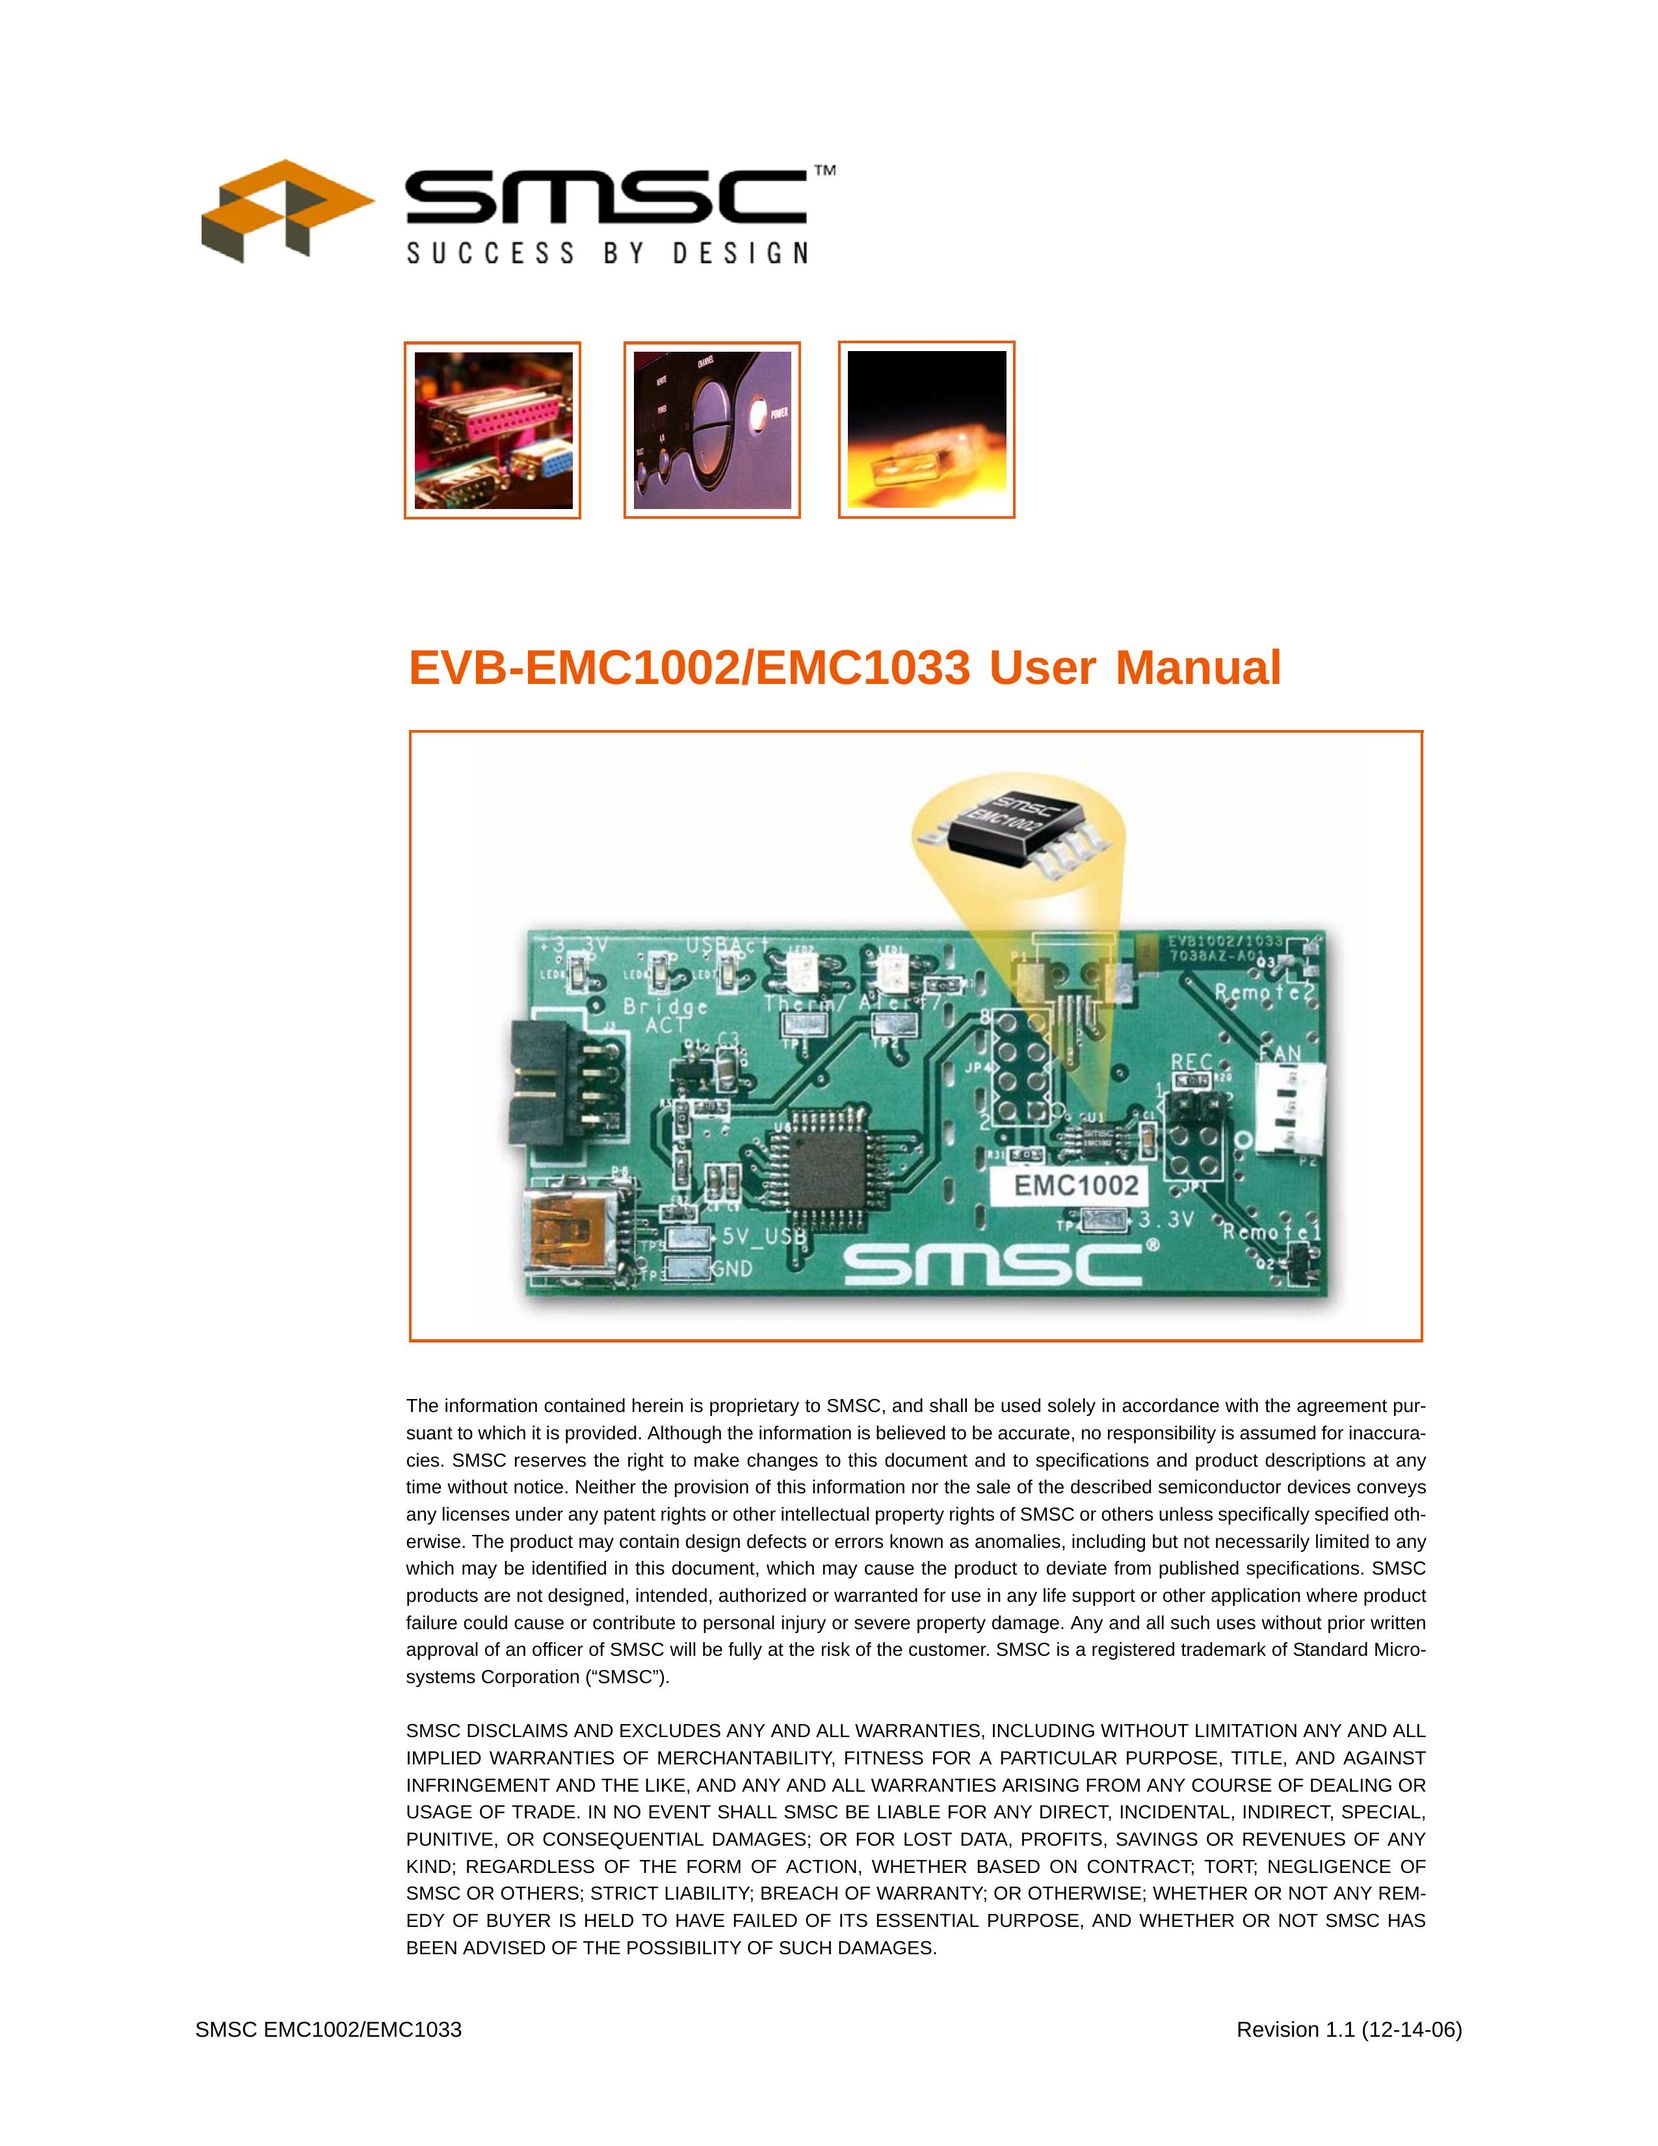 SMSC EVB-EMC1002 Network Card User Manual